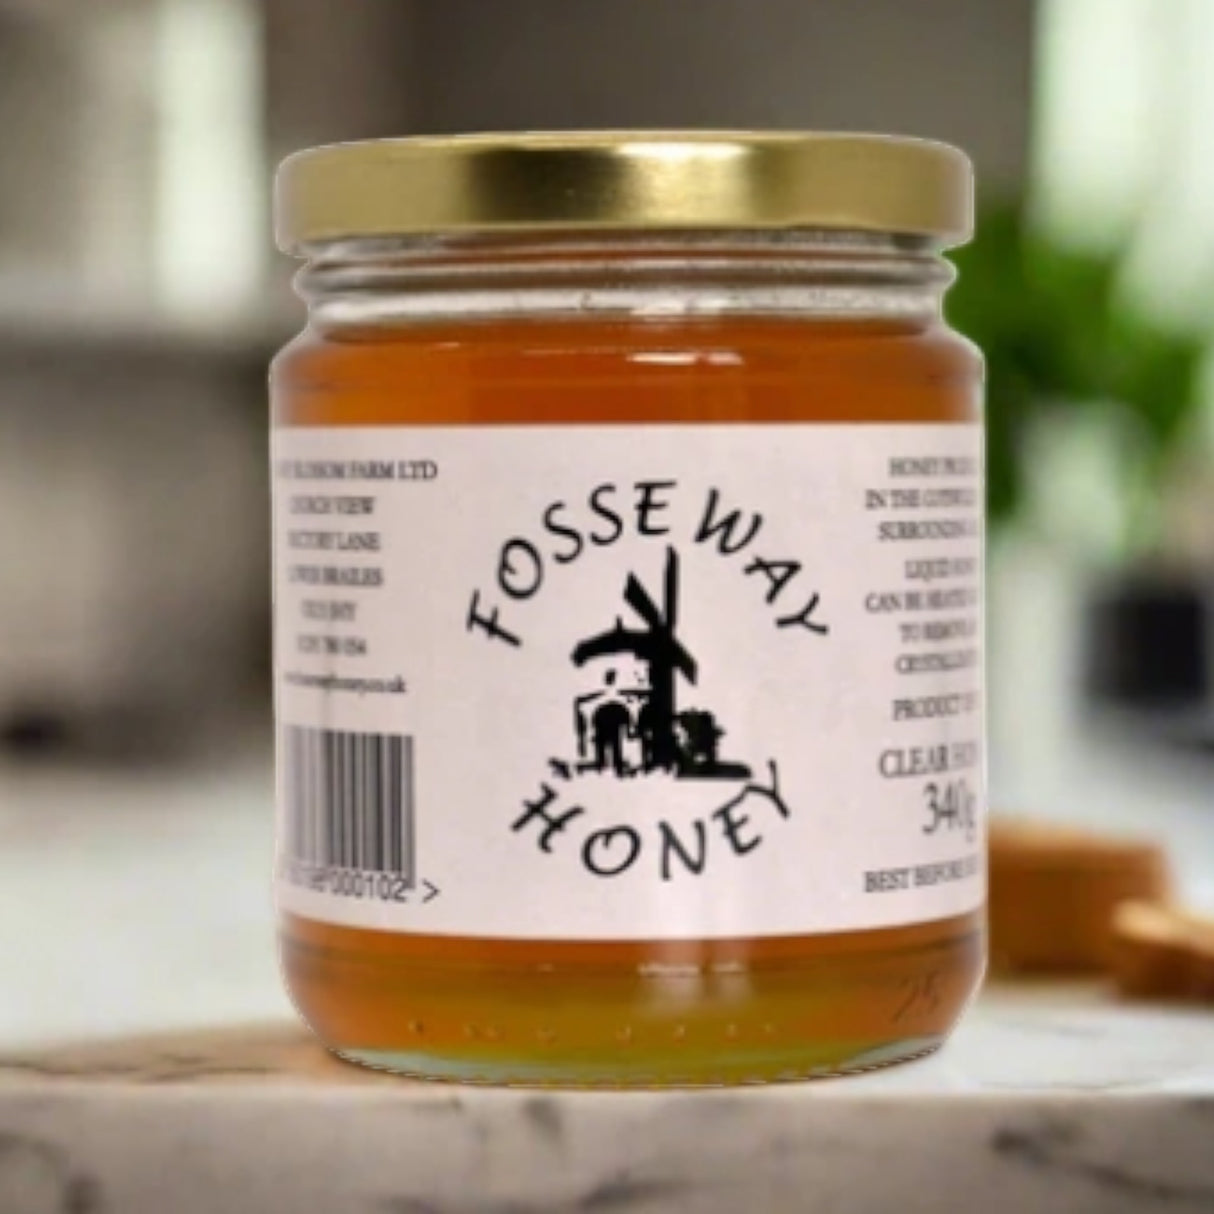 Fosse Way - Honey Runny 227g